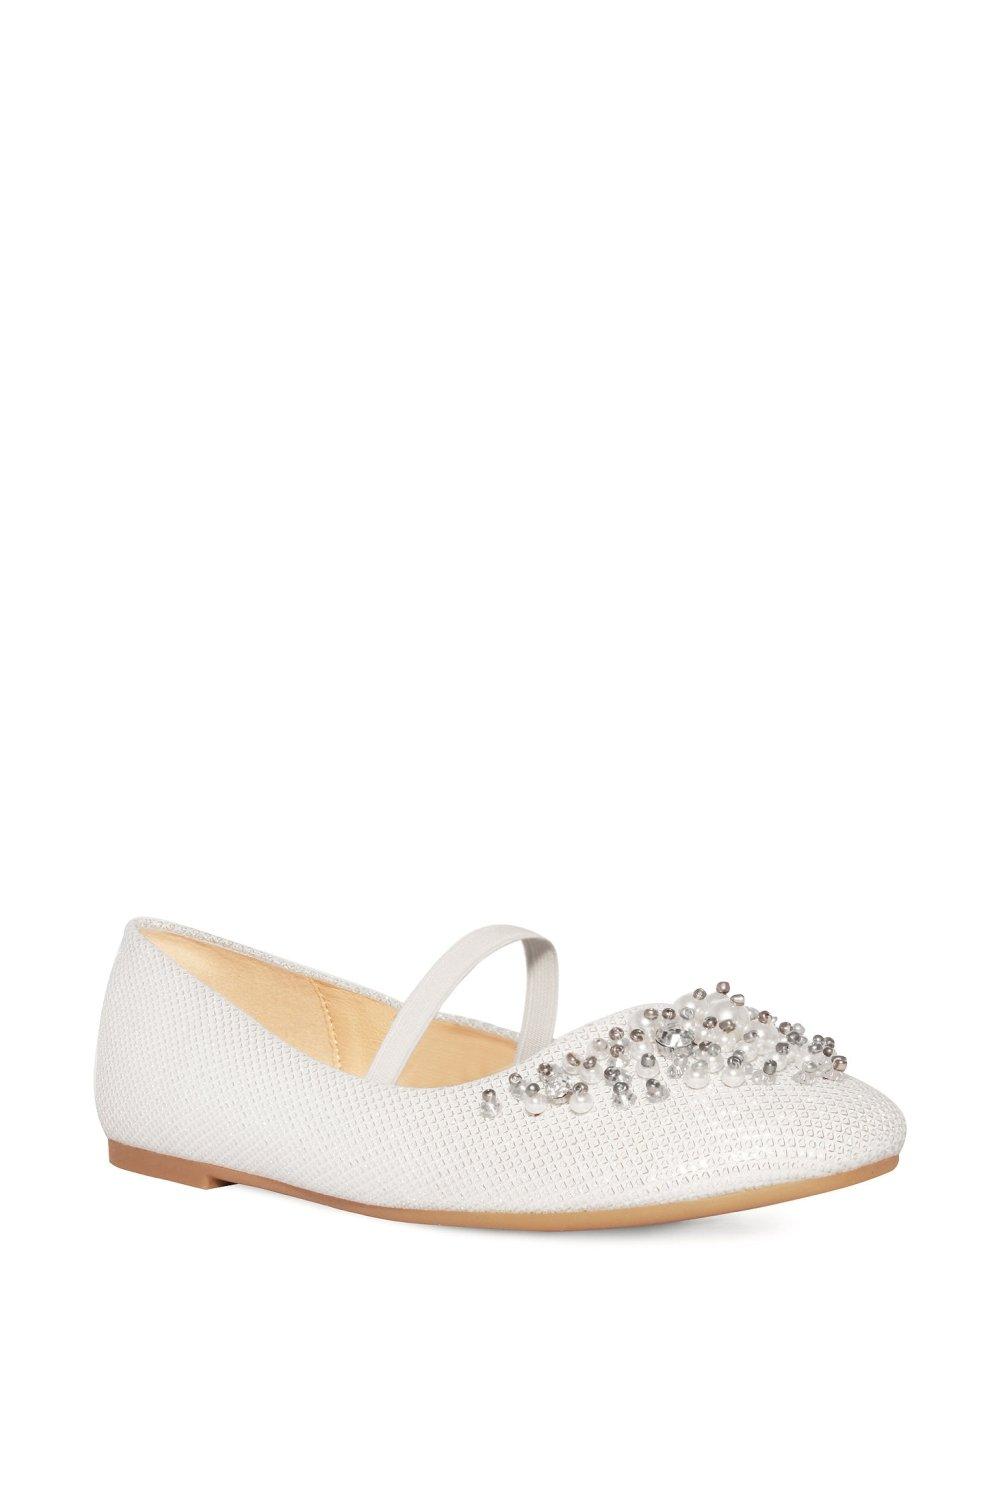 ’Libbie’ Pearl & Diamante Embellished Flatform Shoes